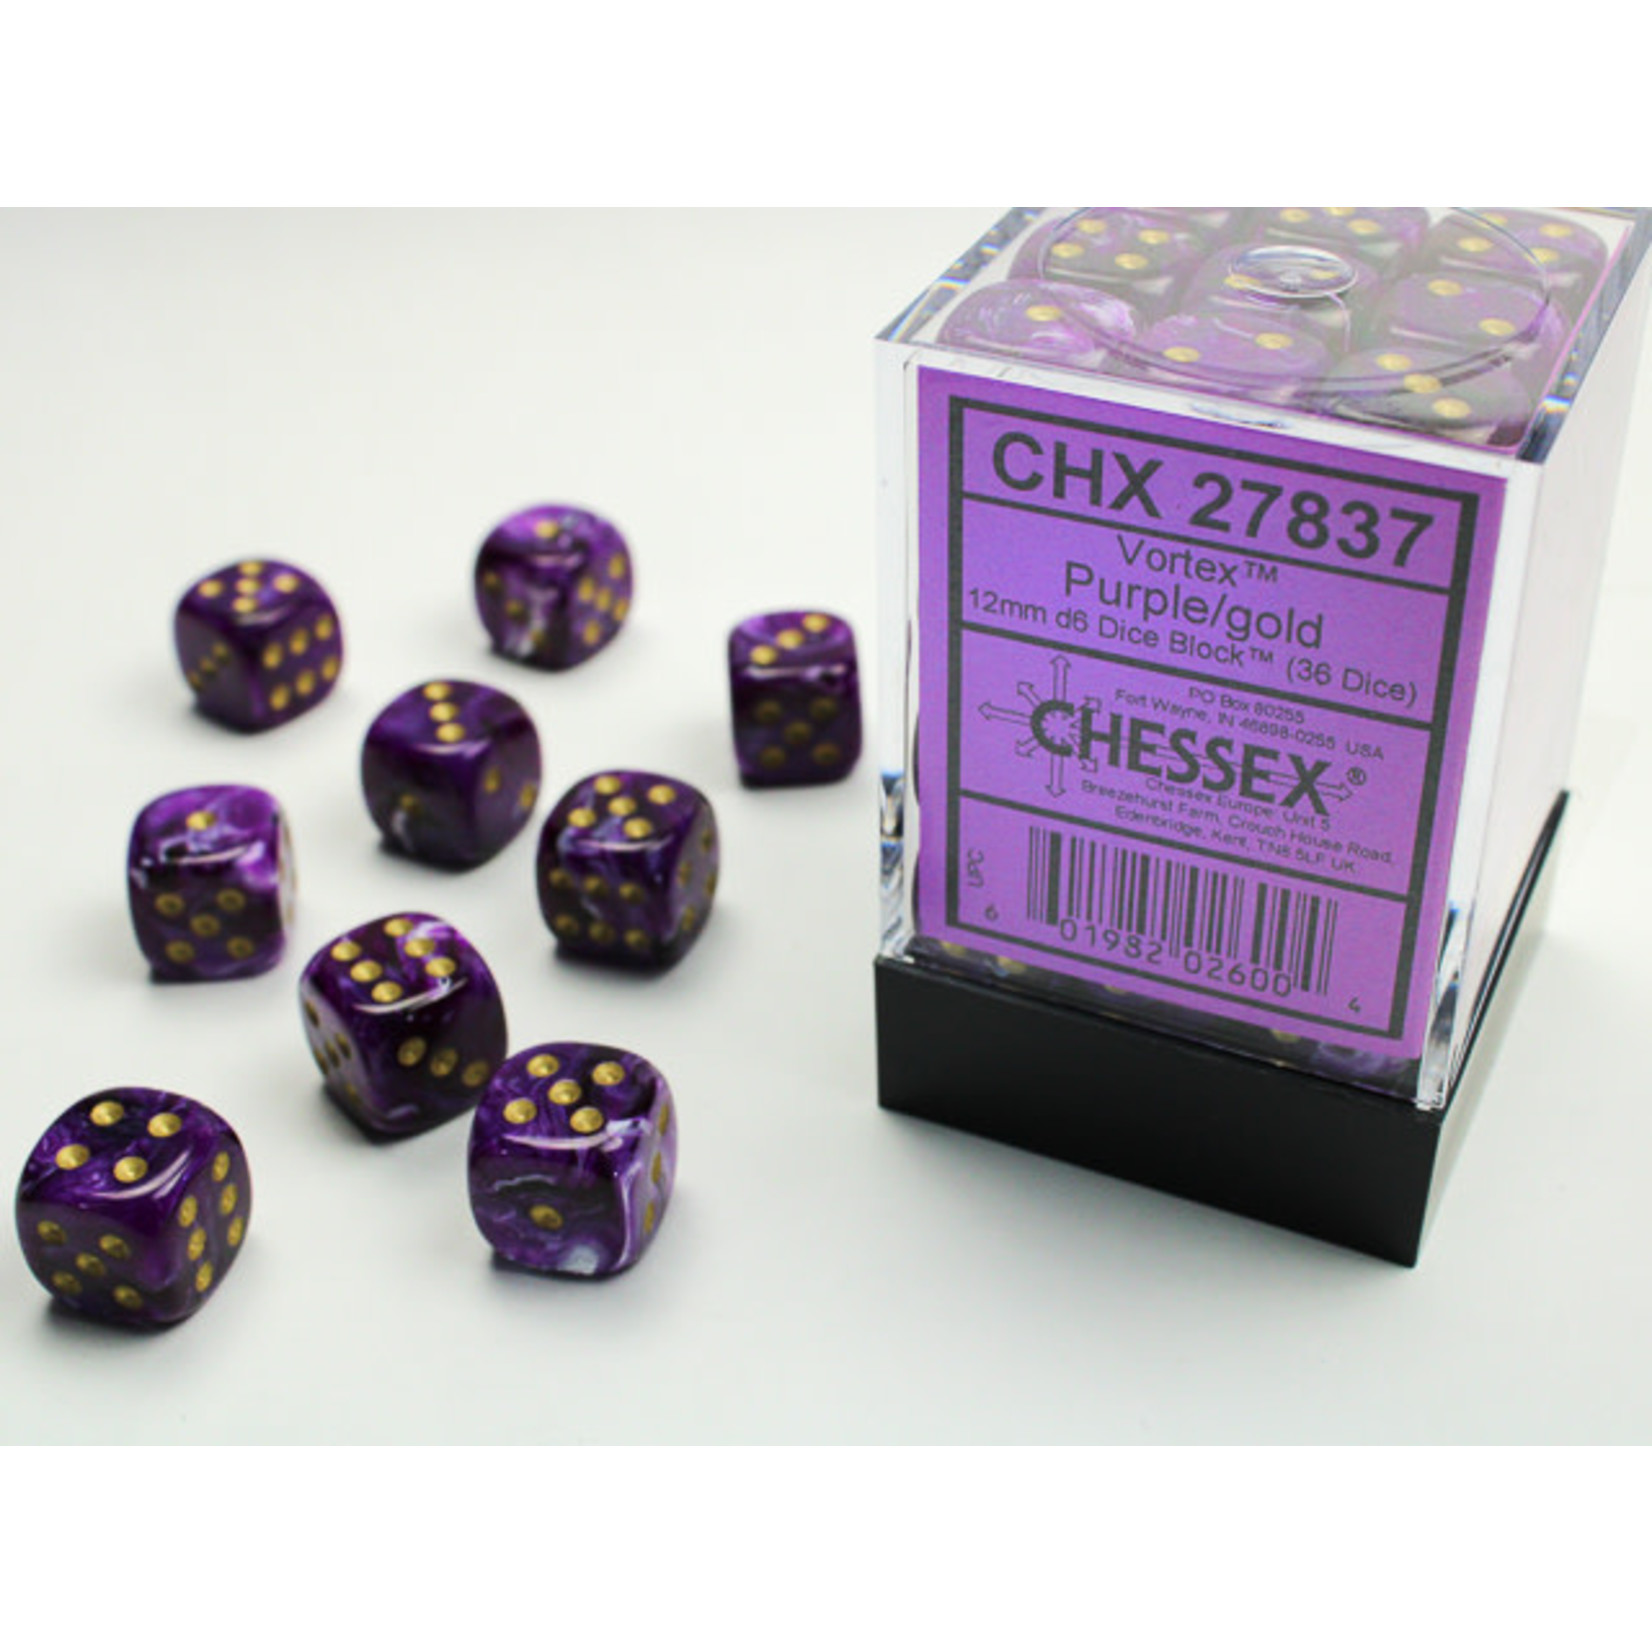 Chessex Dice 12mm 27837 36pc Vortex Purple/Gold